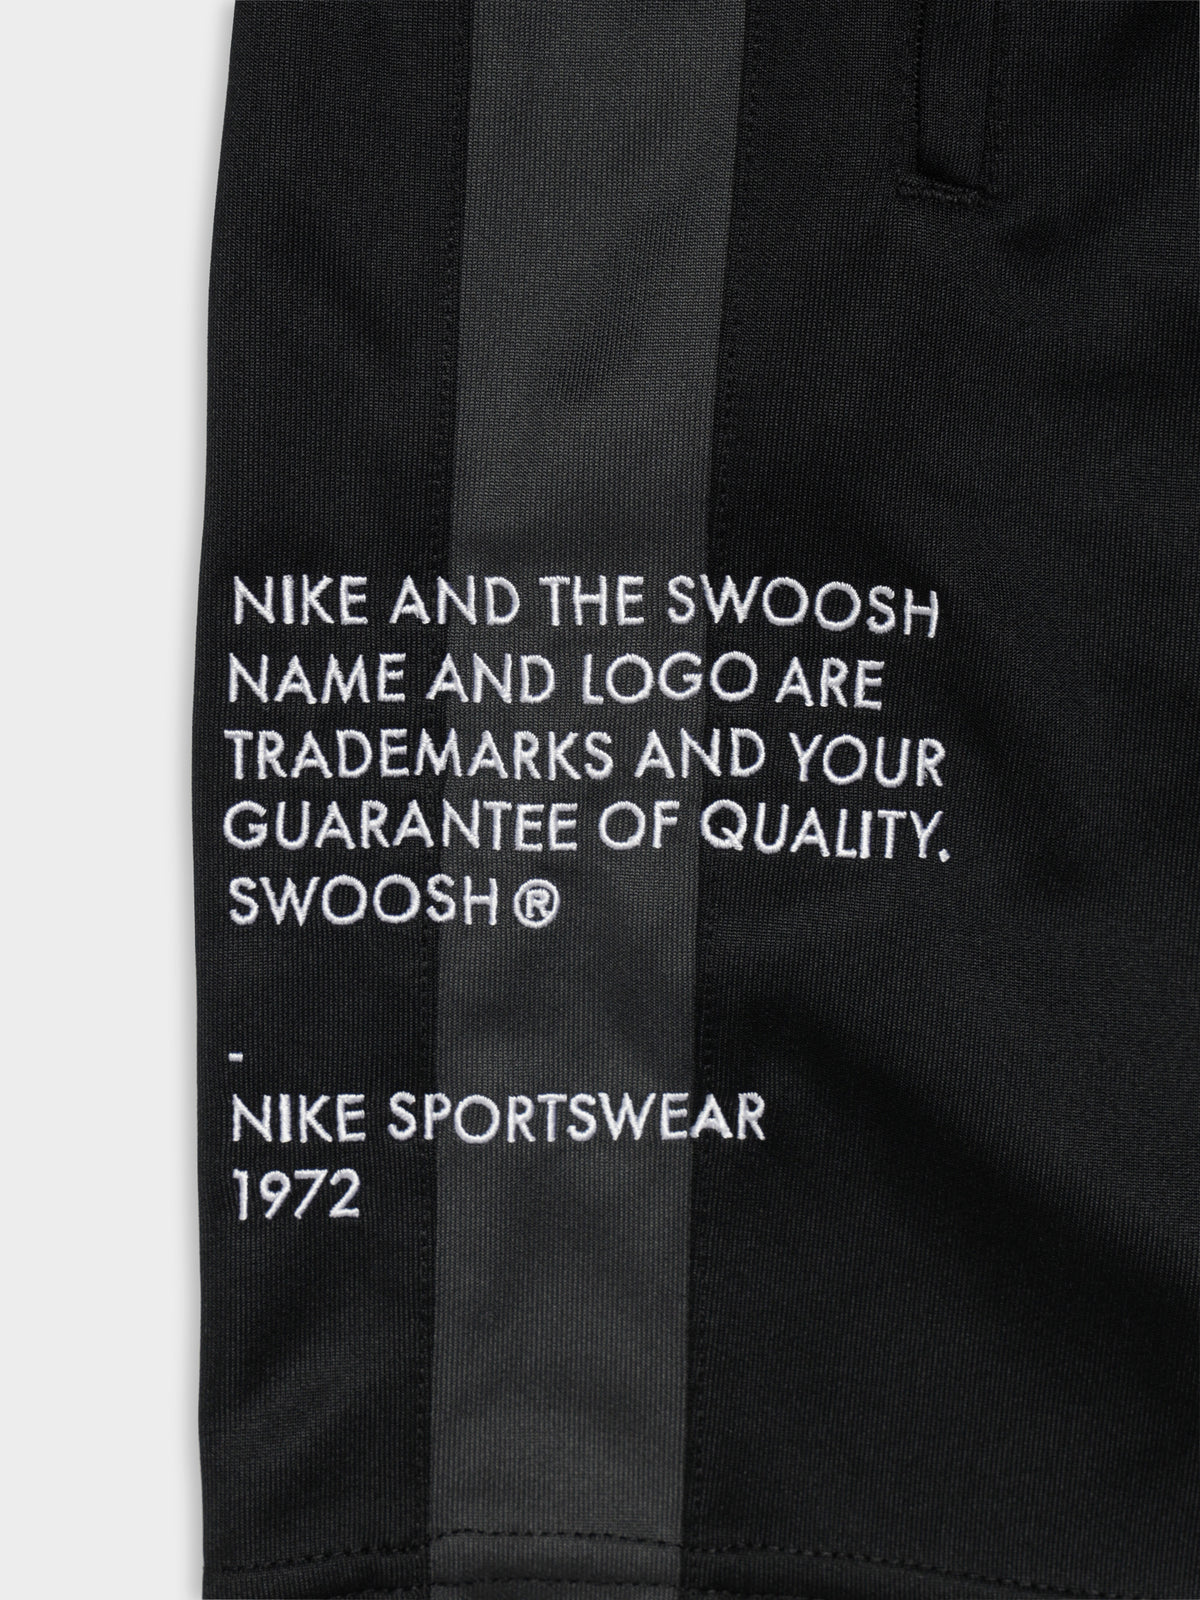 NSW Swoosh Shorts in Black